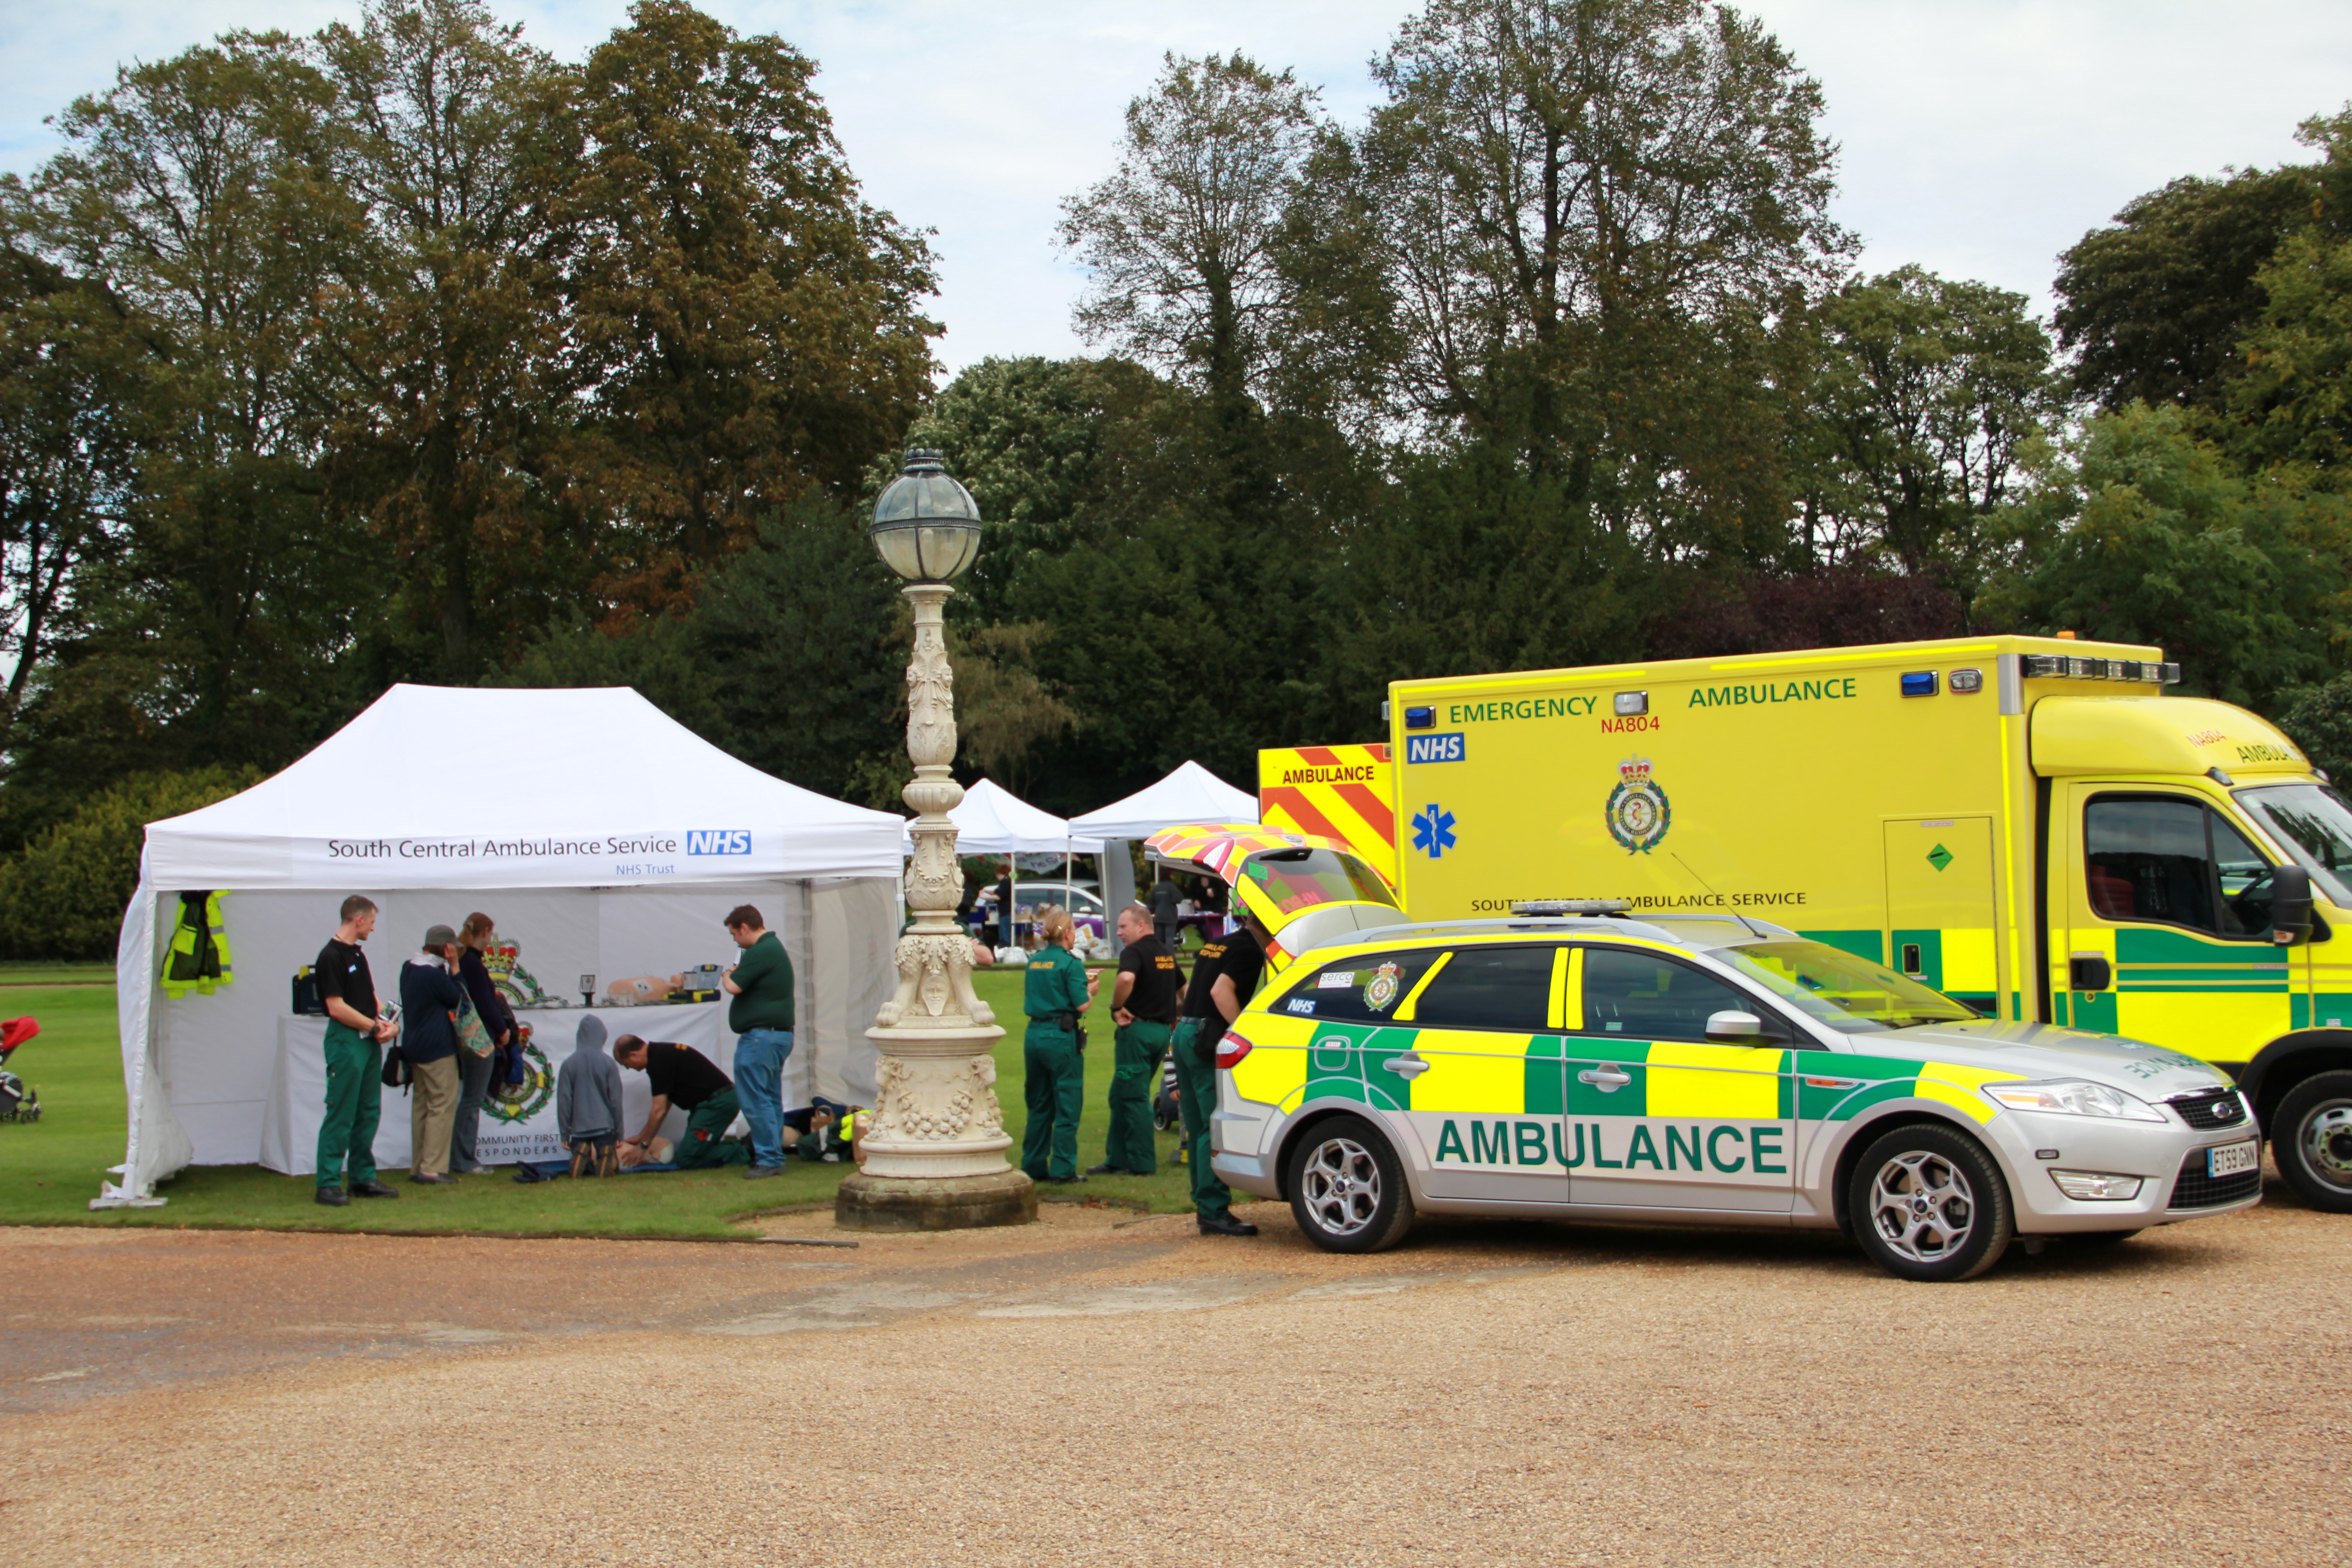 Ambulance display at event